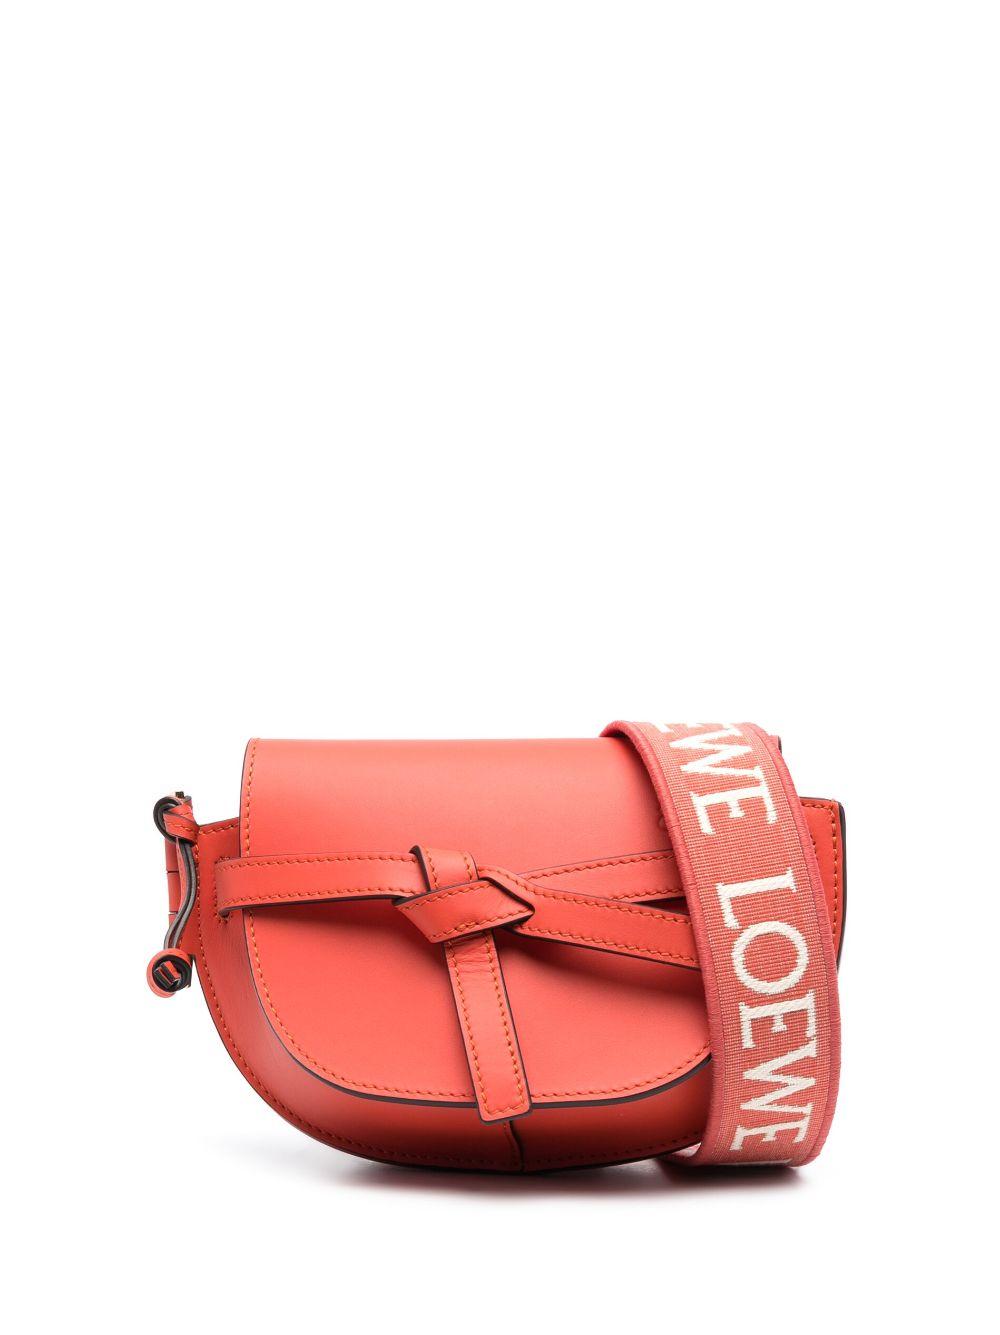 Gate Dual Mini Leather Shoulder Bag in Pink - Loewe